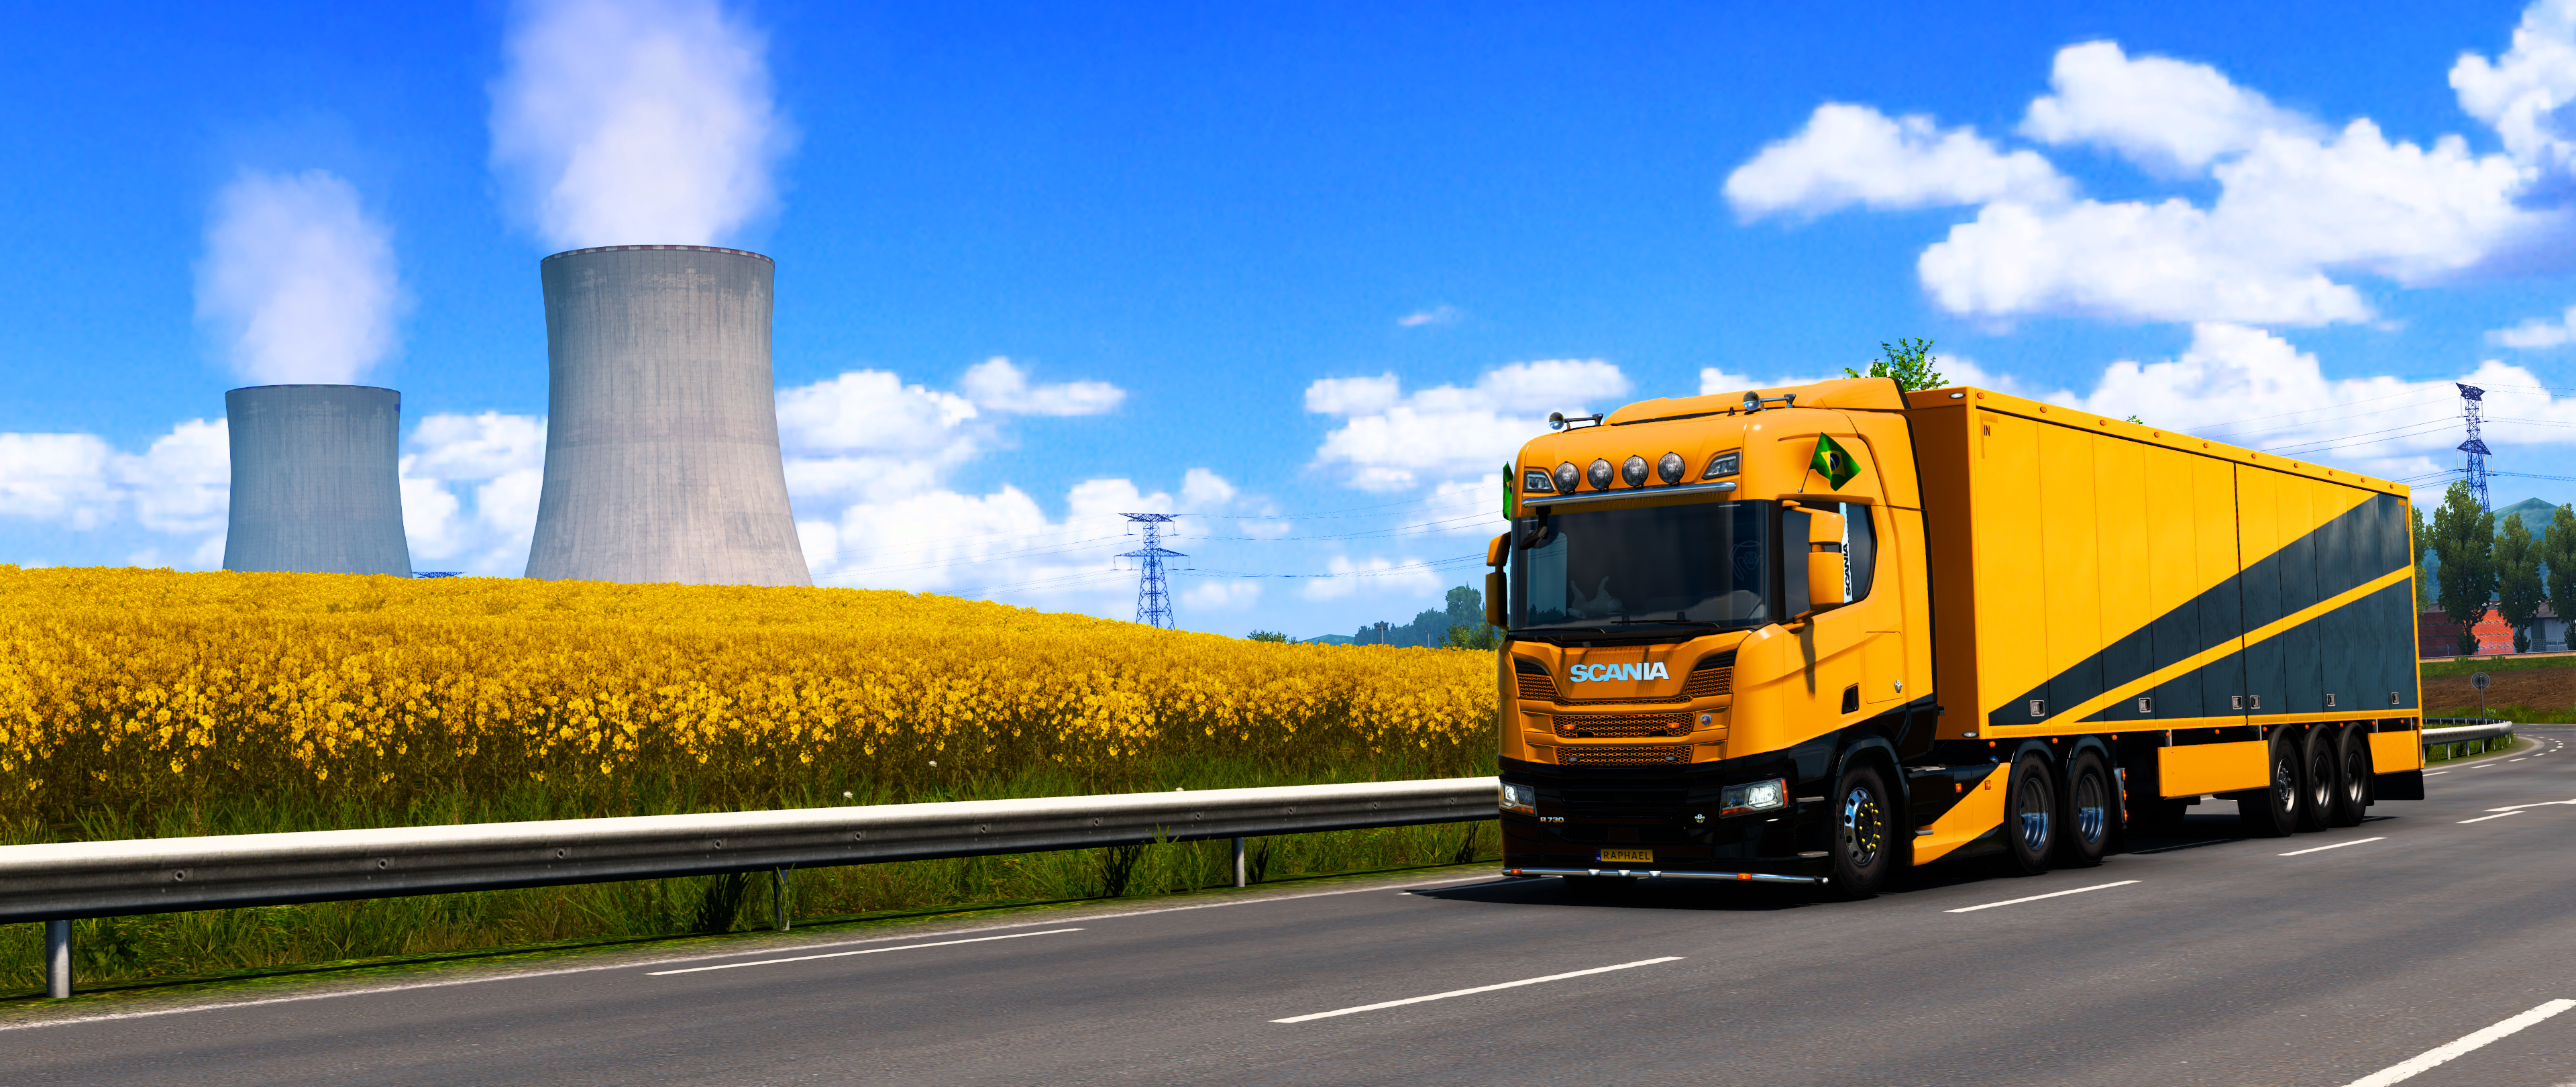 Euro Truck Simulator 2 SCS Software Scania DLC Iberia Truck VTC FBTC Nuclear Plant Sunflowers Sunny  3840x1620